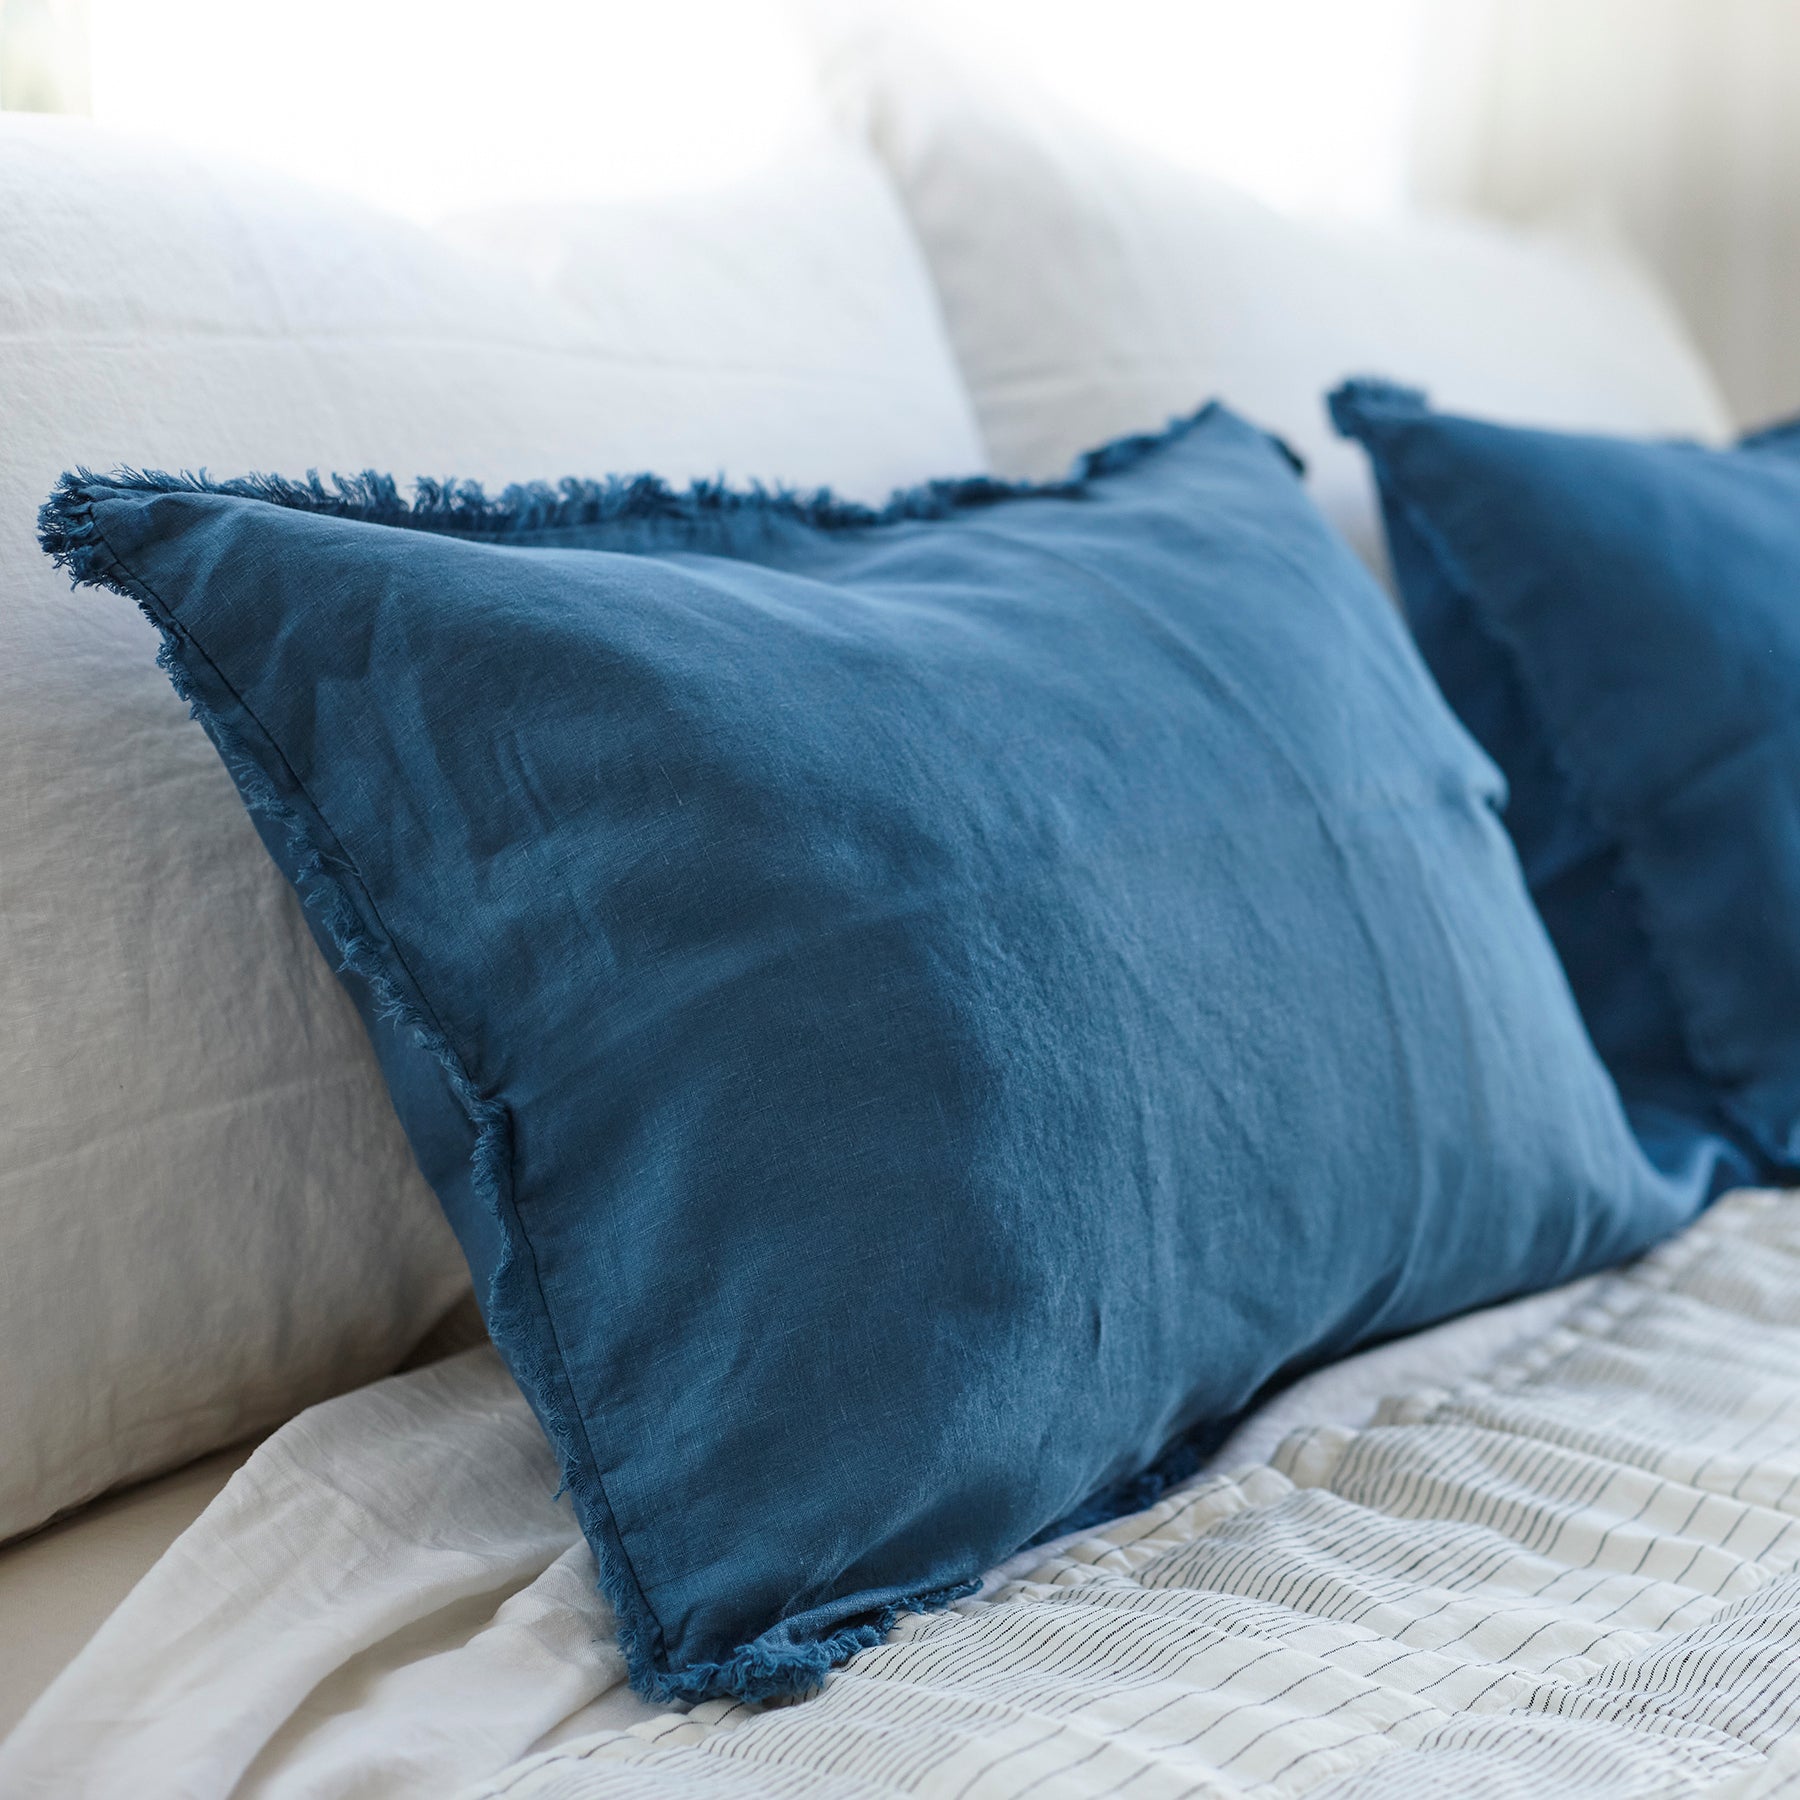 Pair of Linen Pillowcases in Legion Blue